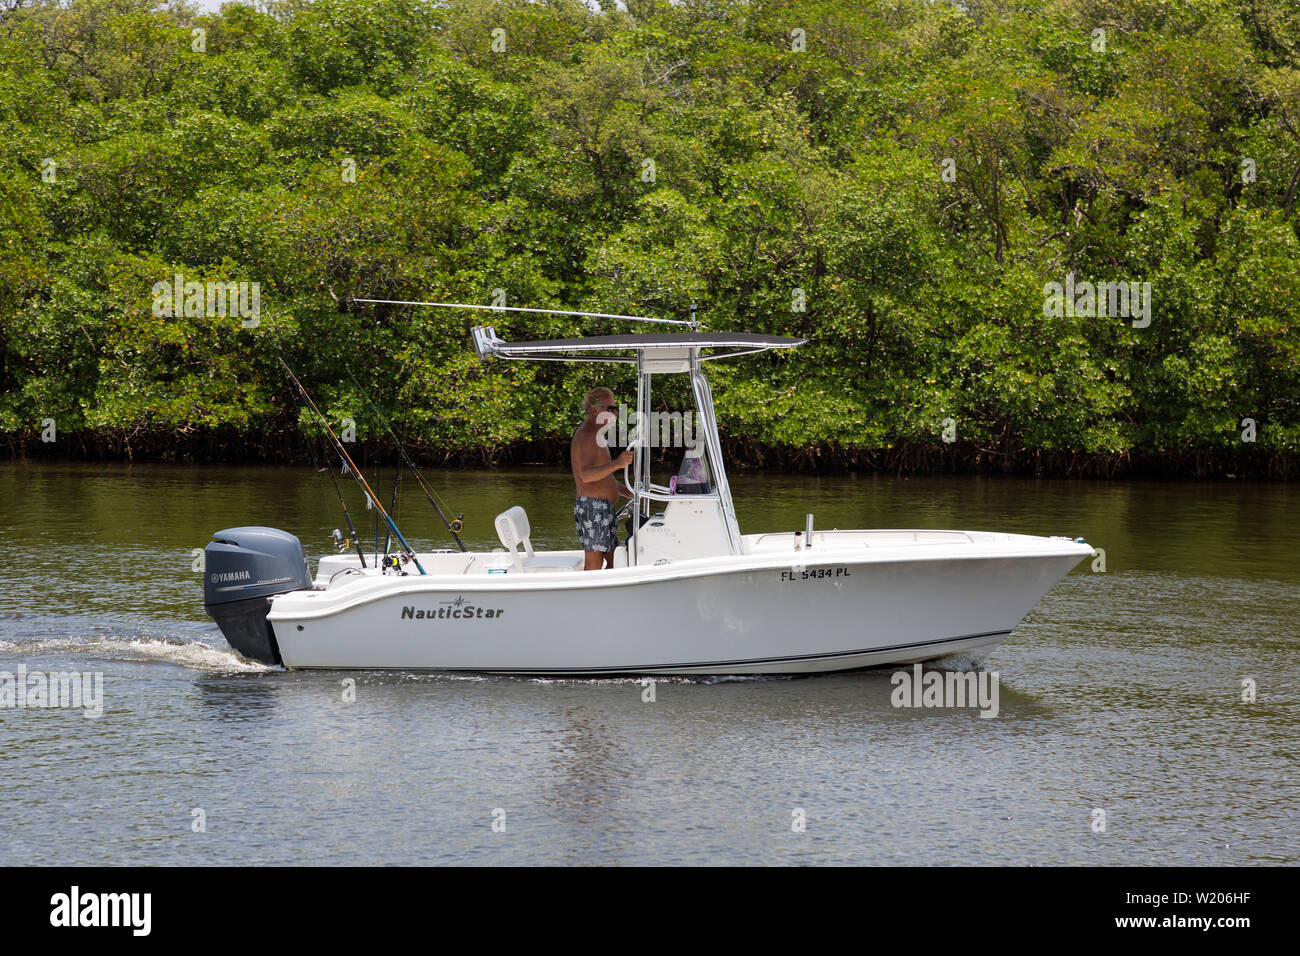 A fisherman moves his NauticStar fishing boat through the calm waters of the Intercoastal Waterway between Boynton Beach and Ocean Ridge, Florida, USA. Stock Photo